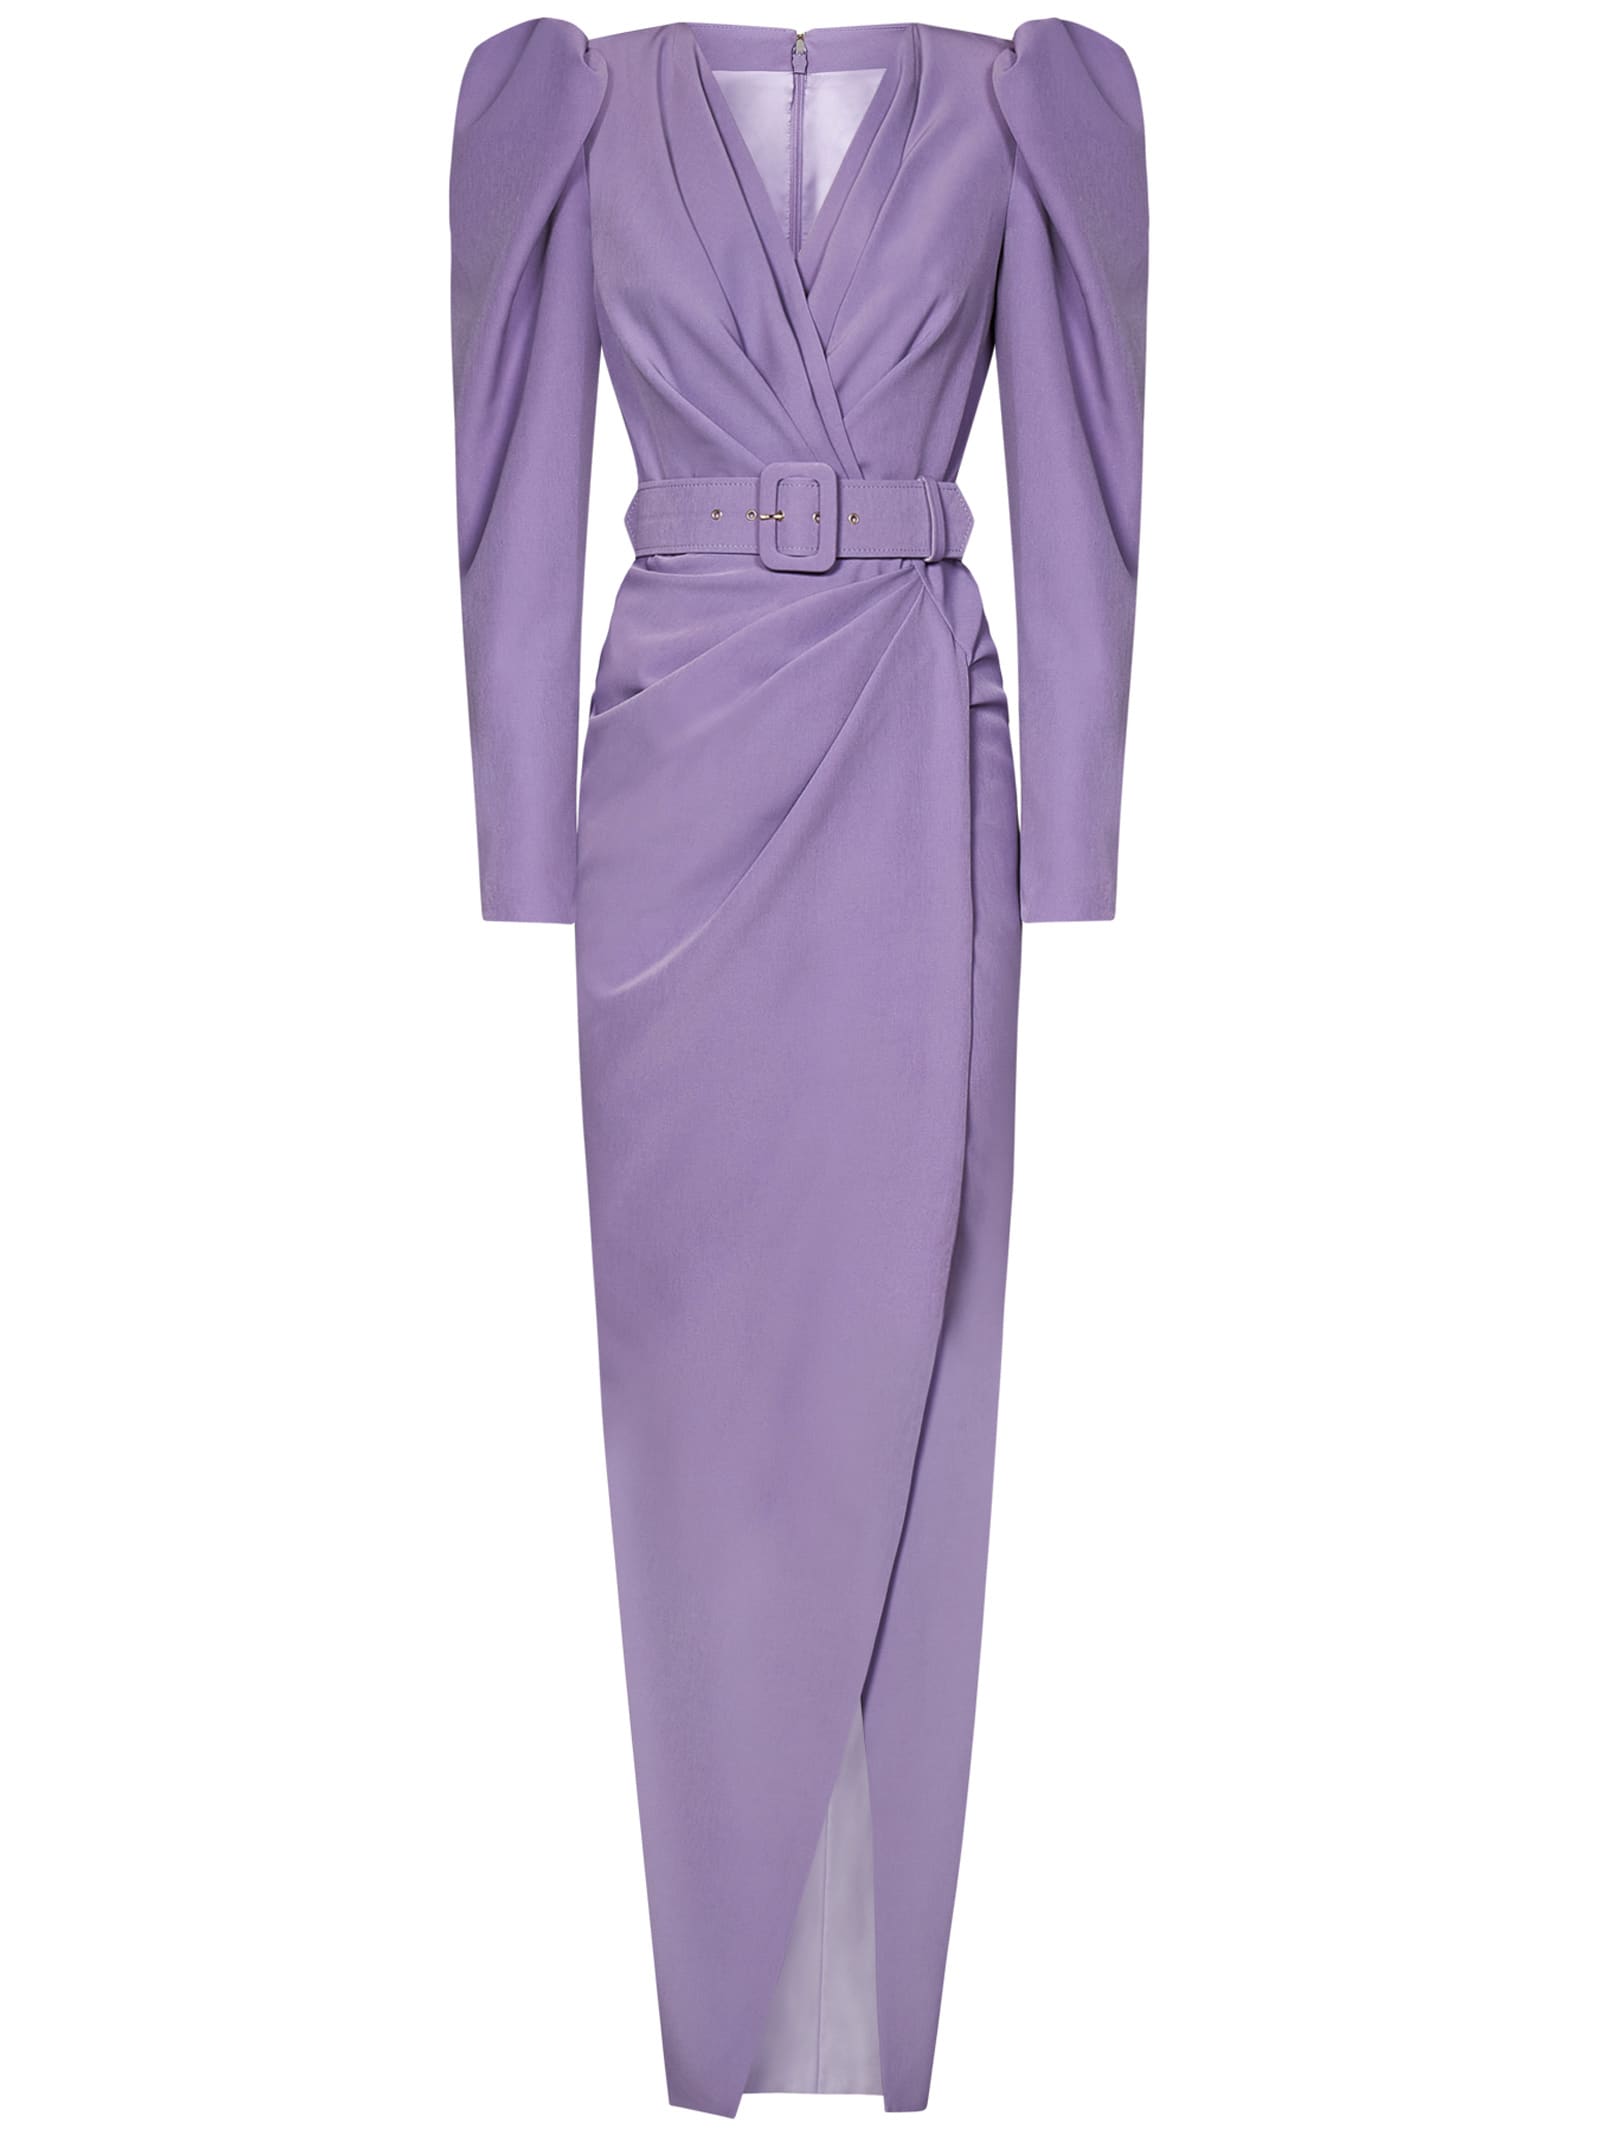 Rhea Costa Raven crepe long dress - Purple